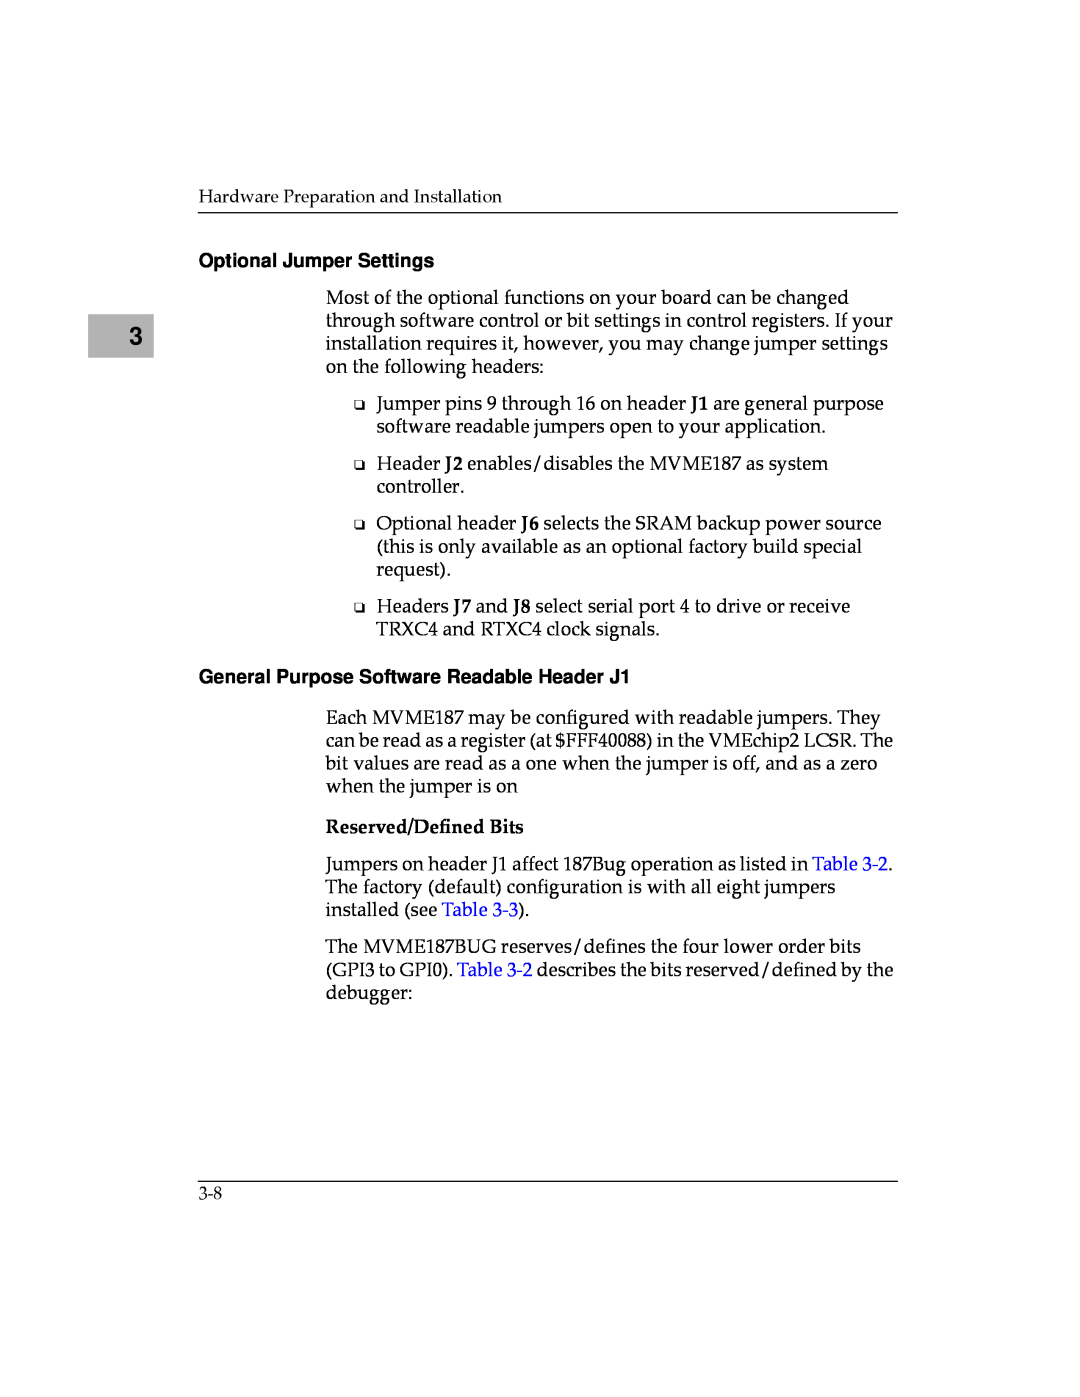 Motorola MVME187 manual Optional Jumper Settings, General Purpose Software Readable Header J1, Reserved/DeÞned Bits 